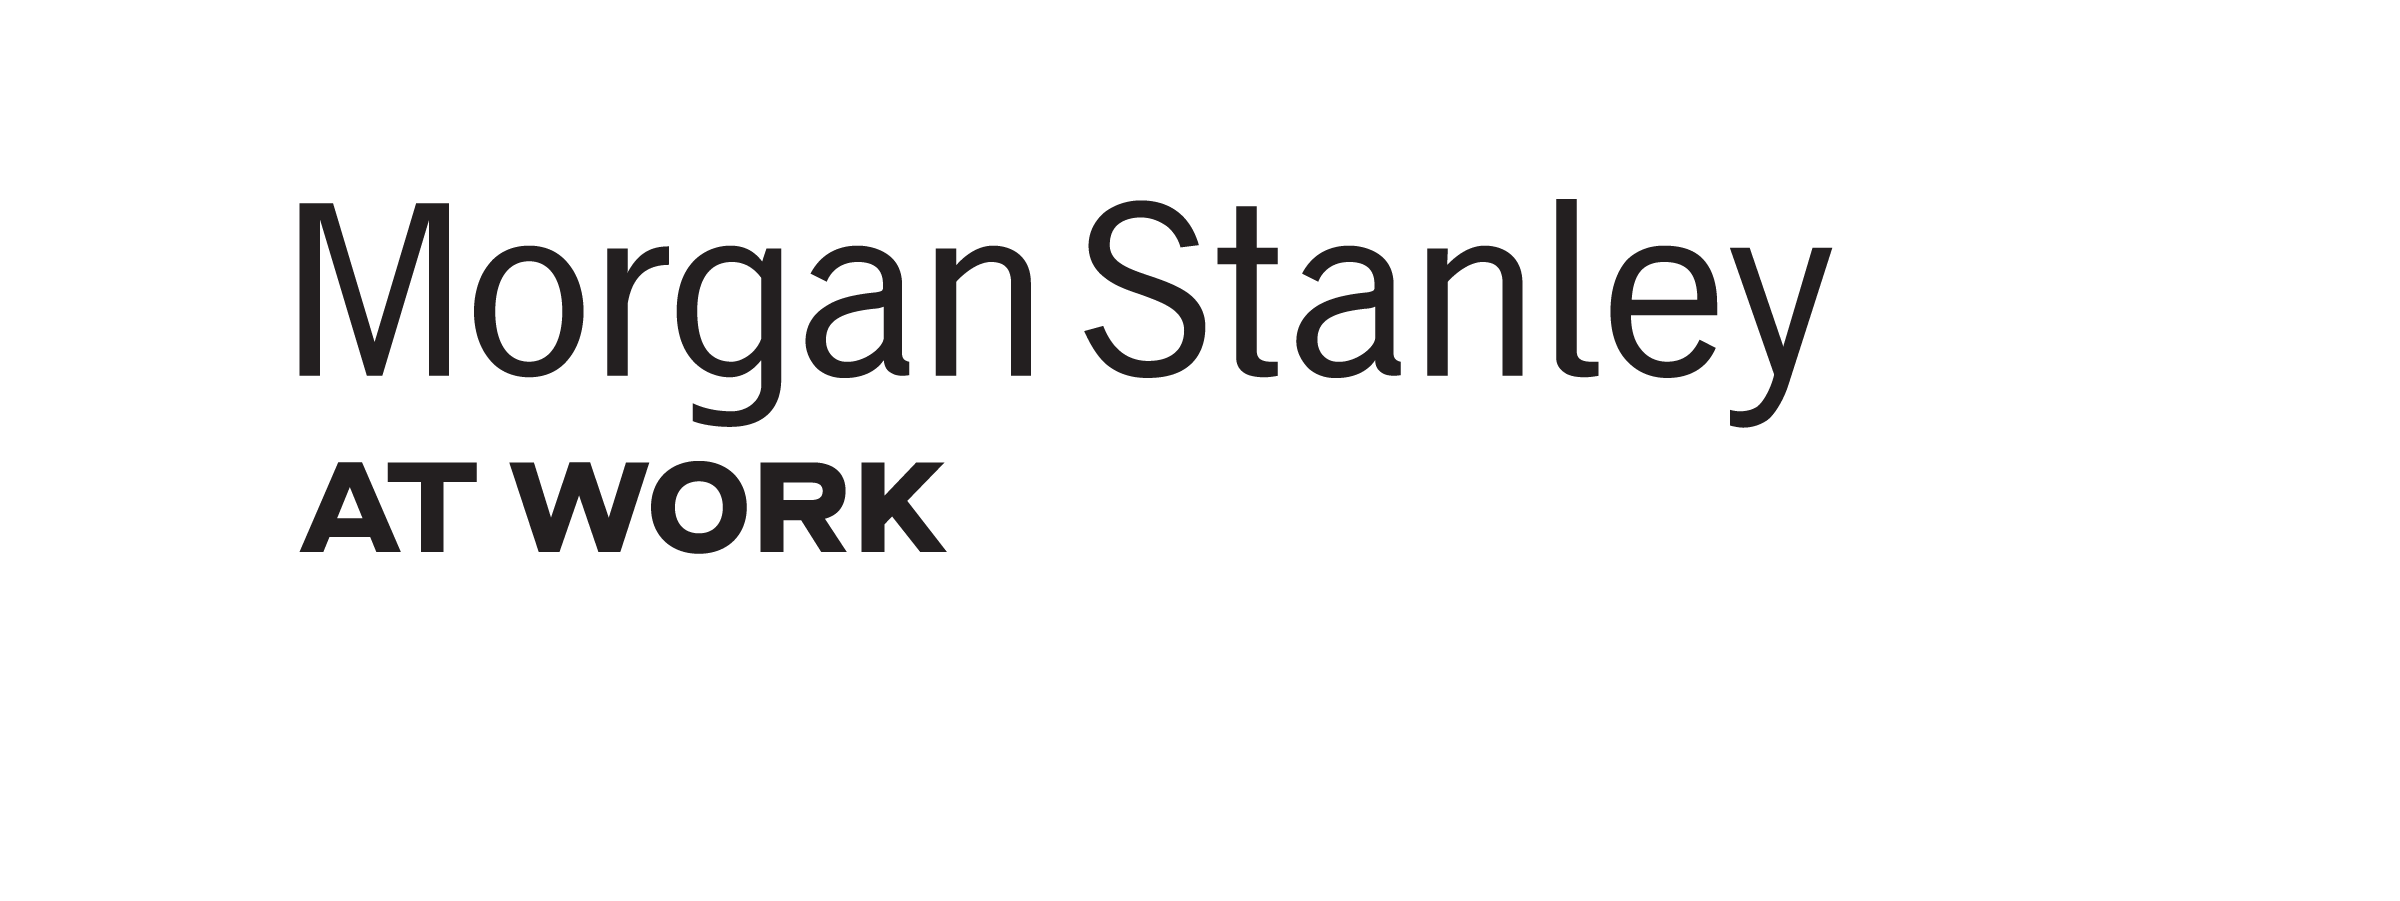 Morgan Stanley webcast from EFWB 2020 Sponsorship